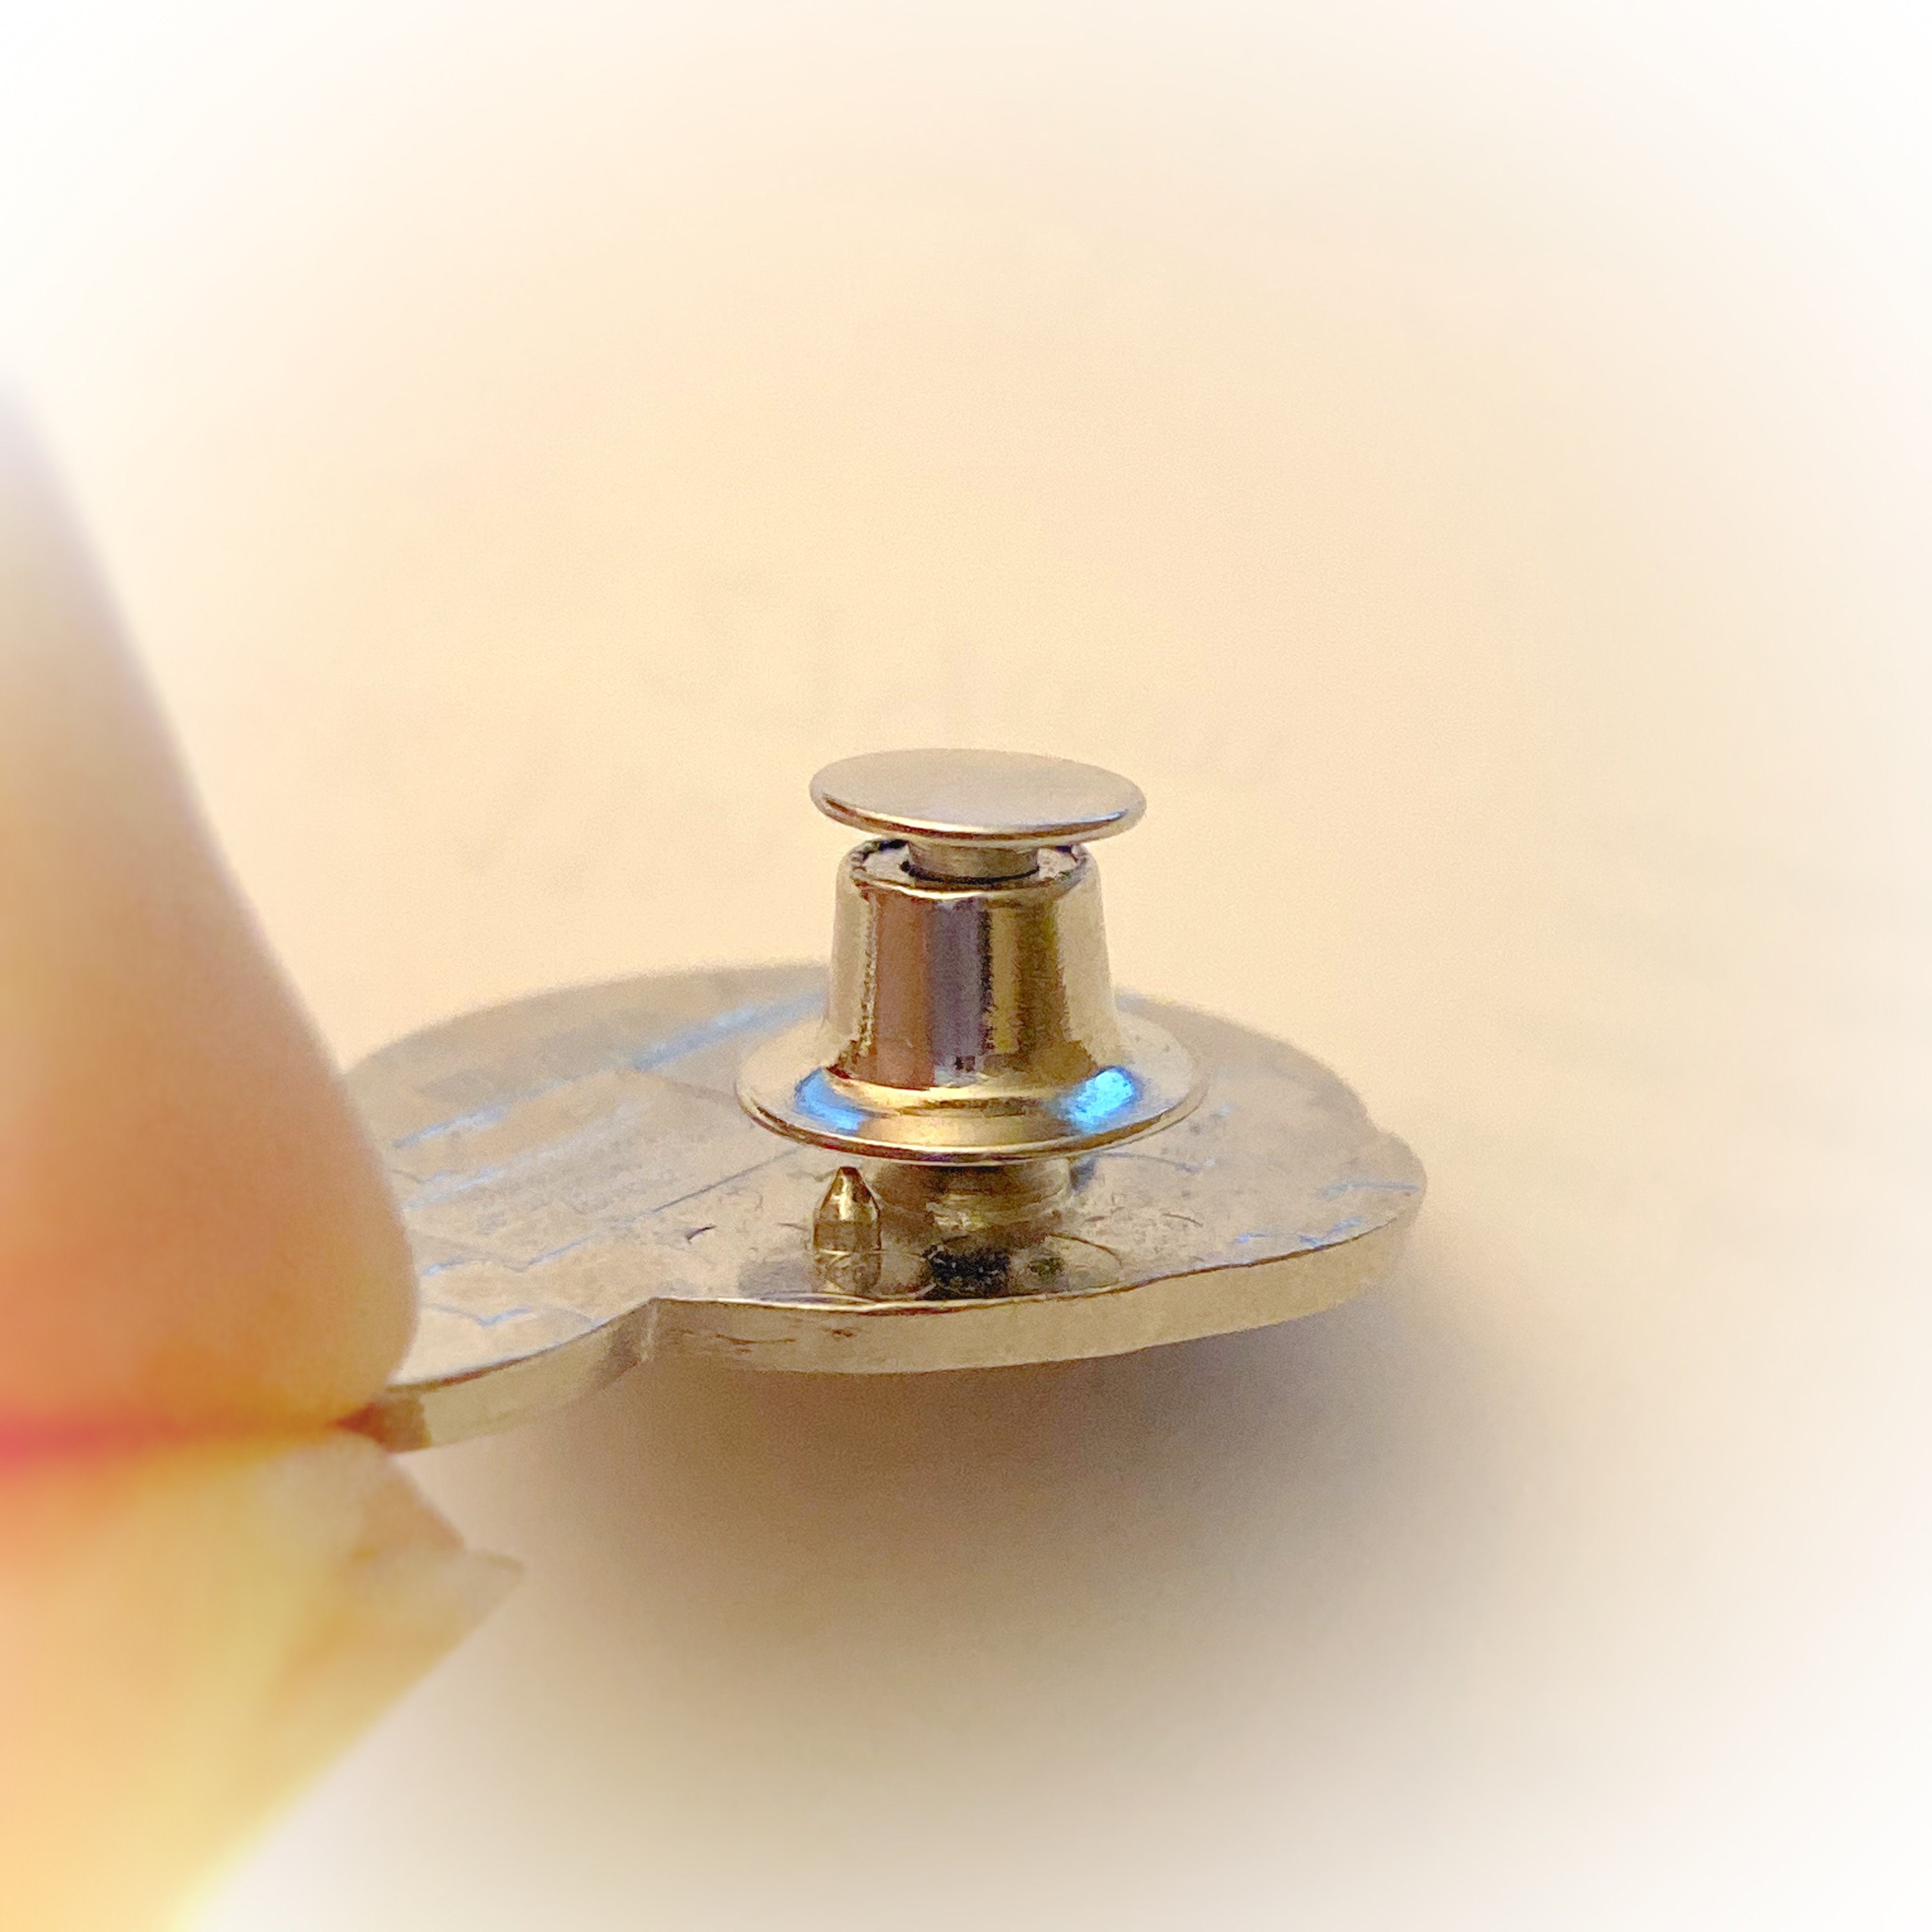 Locking Pin Backs No Tools Needed Silver Pin Lock Backings for